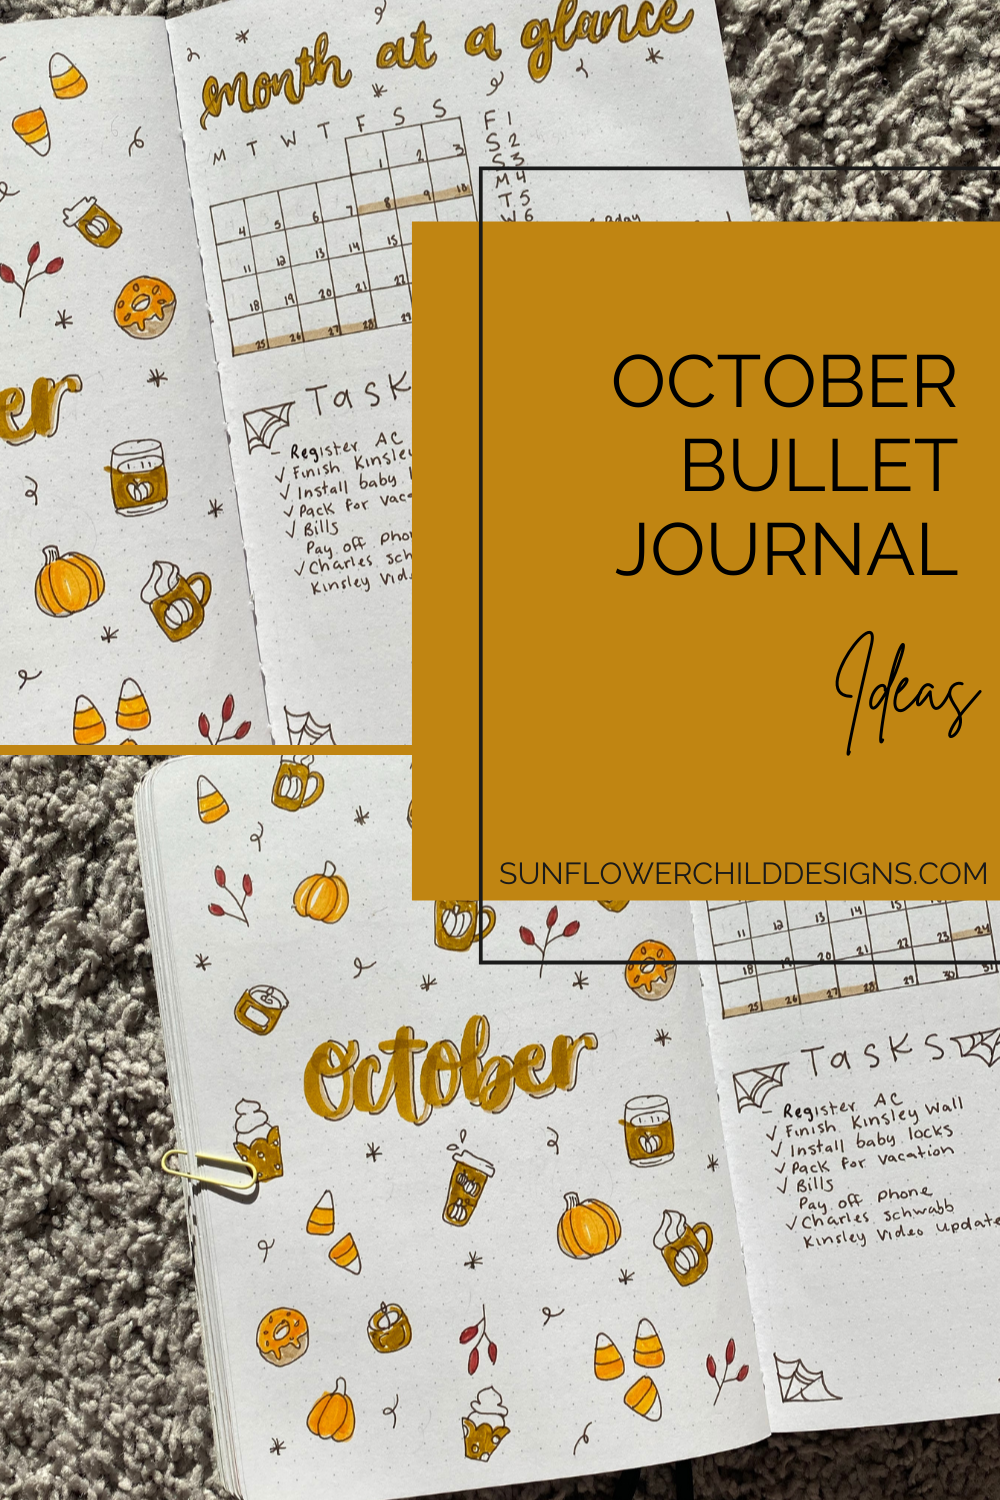 October-bullet-journal-ideas-13.png